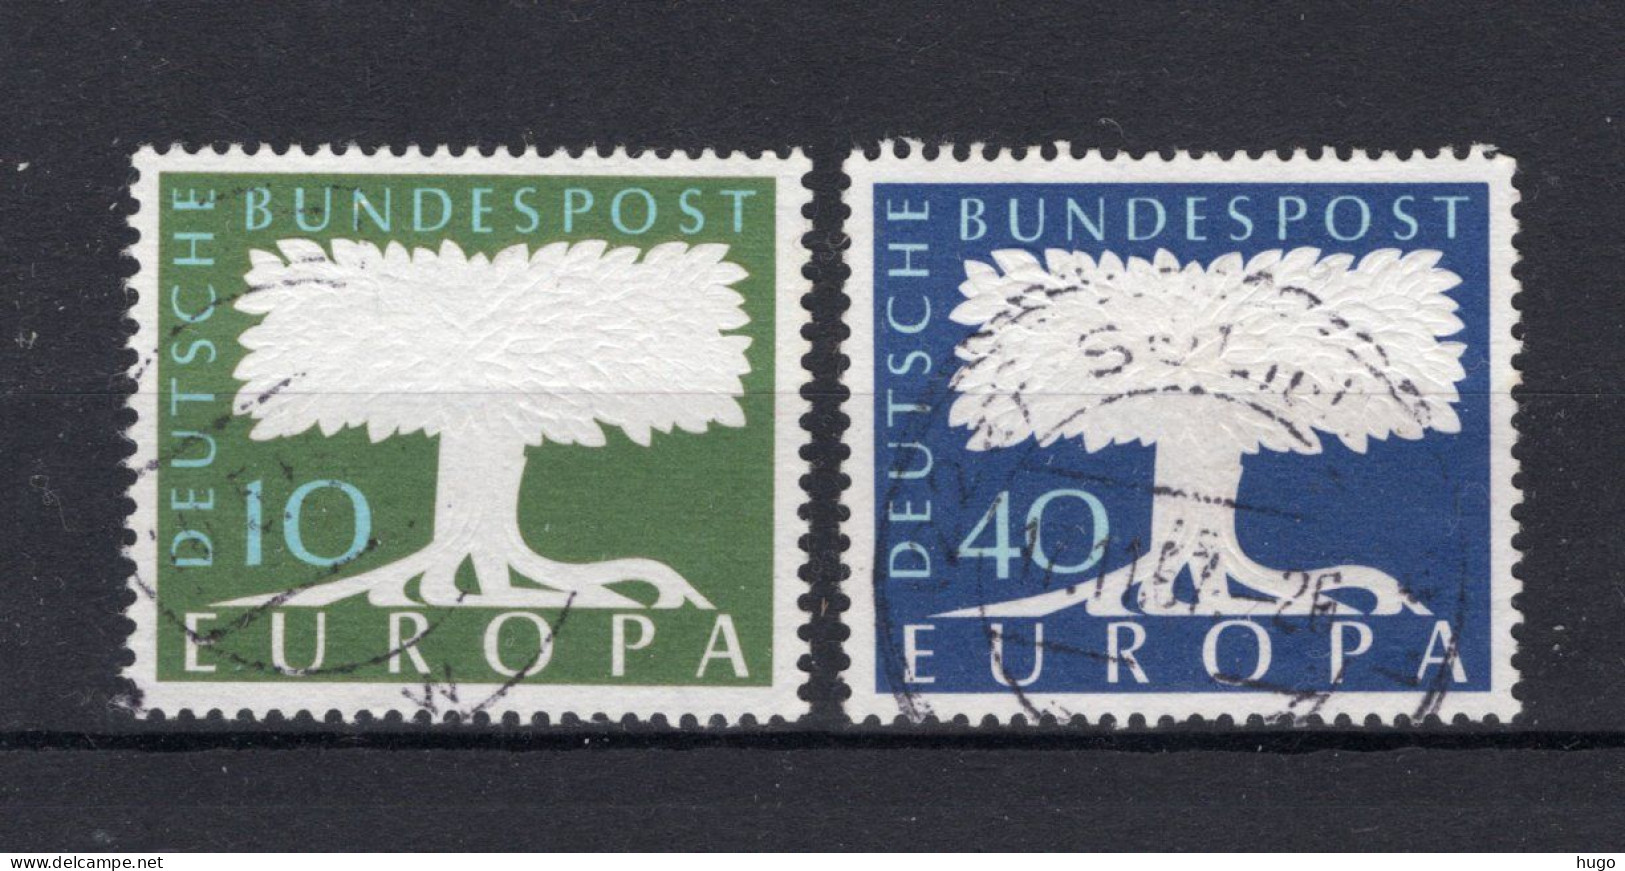 DUITSLAND Yt. 140/141° Gestempeld 1957 - Used Stamps